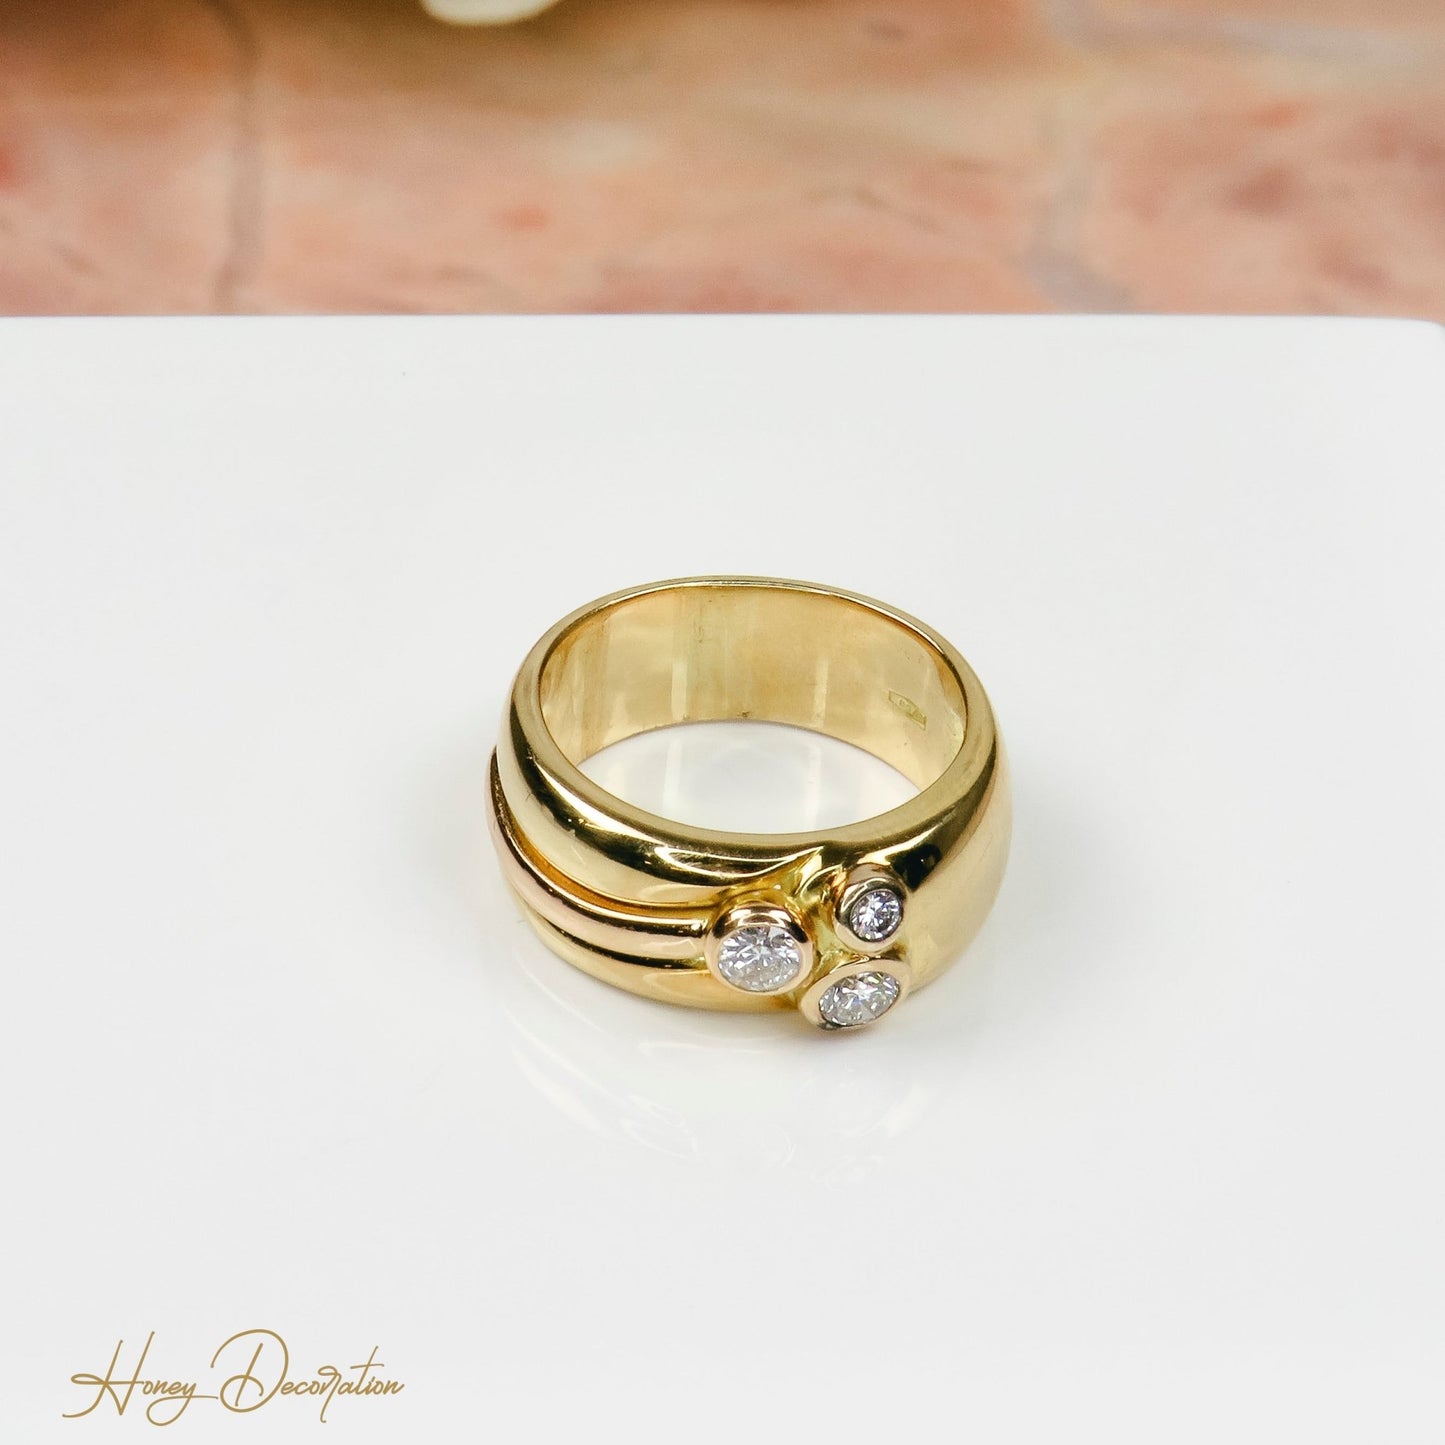 Edler Cadeaux-Goldring mit Brillanten - Honey Decoration